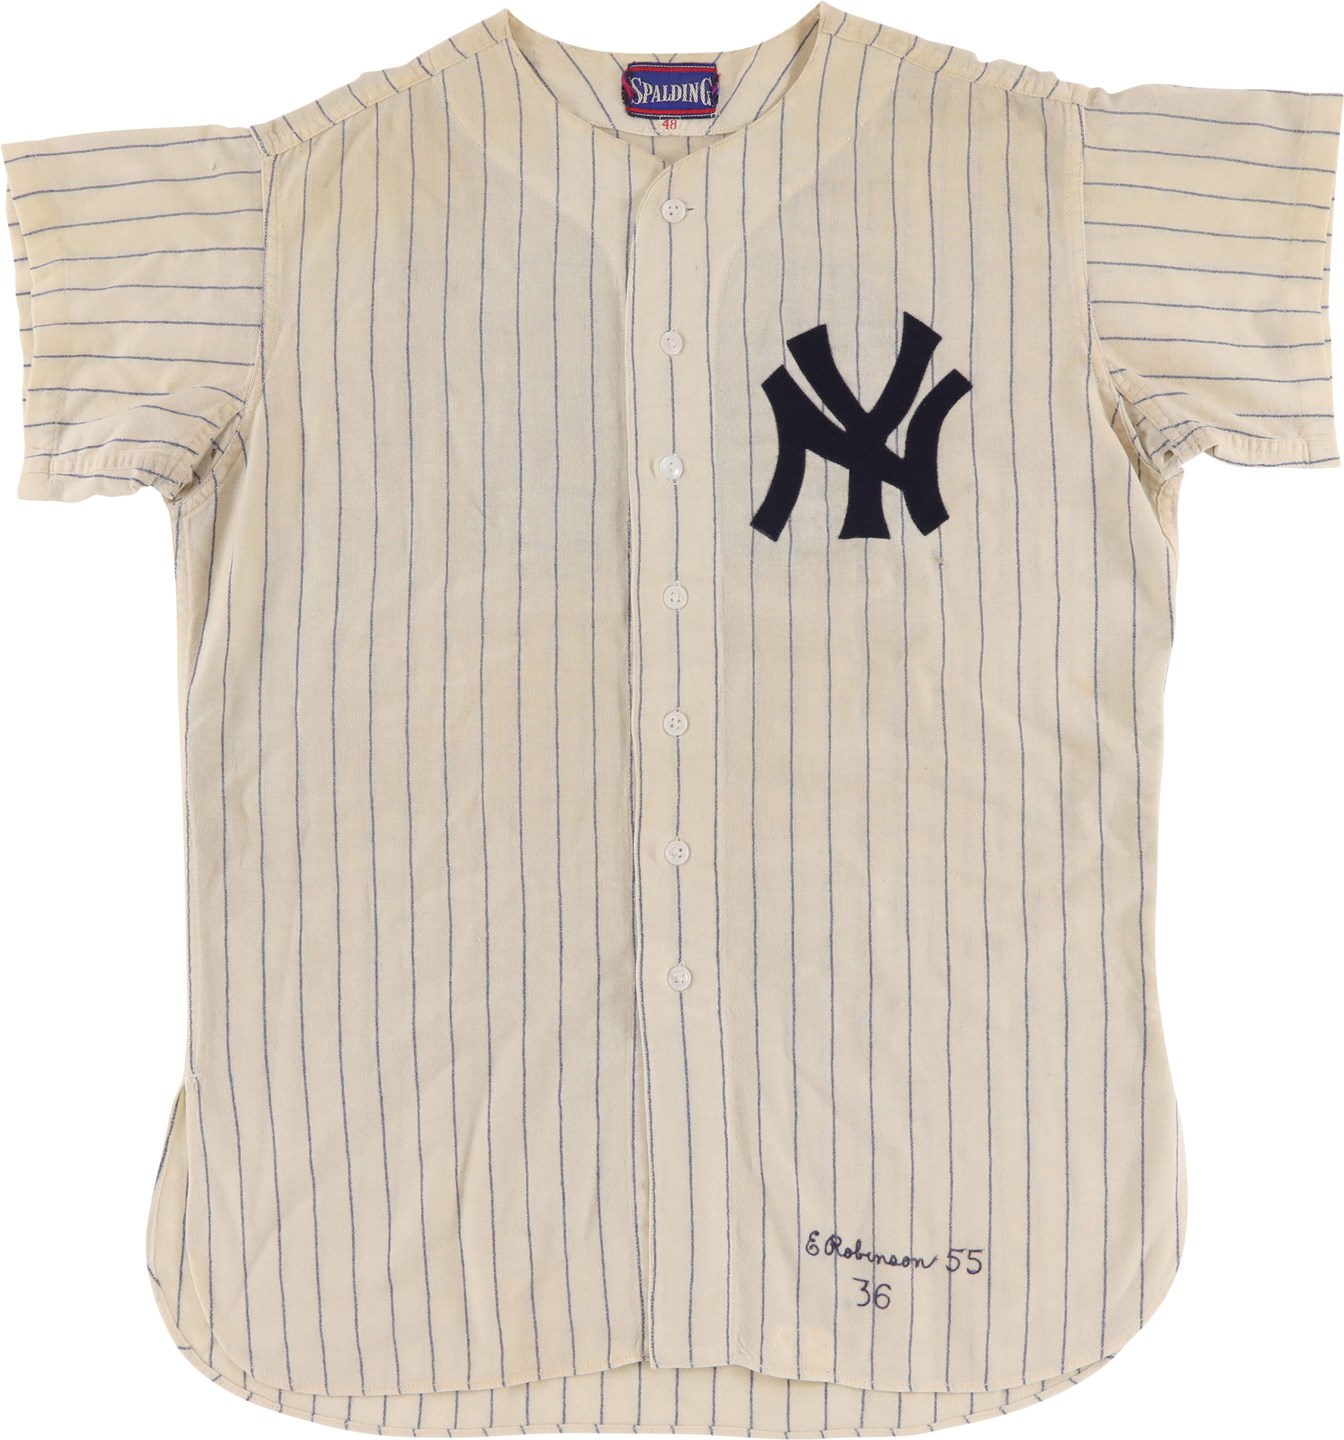 - 1955 Eddie Robinson New York Yankees Game Worn Jersey (Photo-Matched)